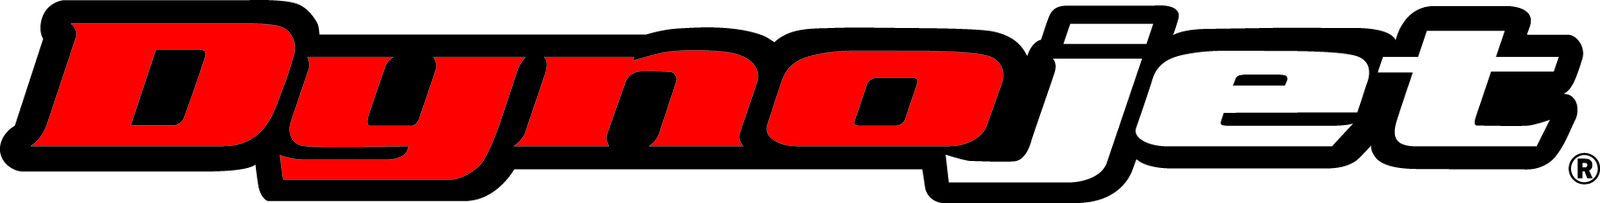 2017 Harley-Davidson® Dyno tuning red and white logo